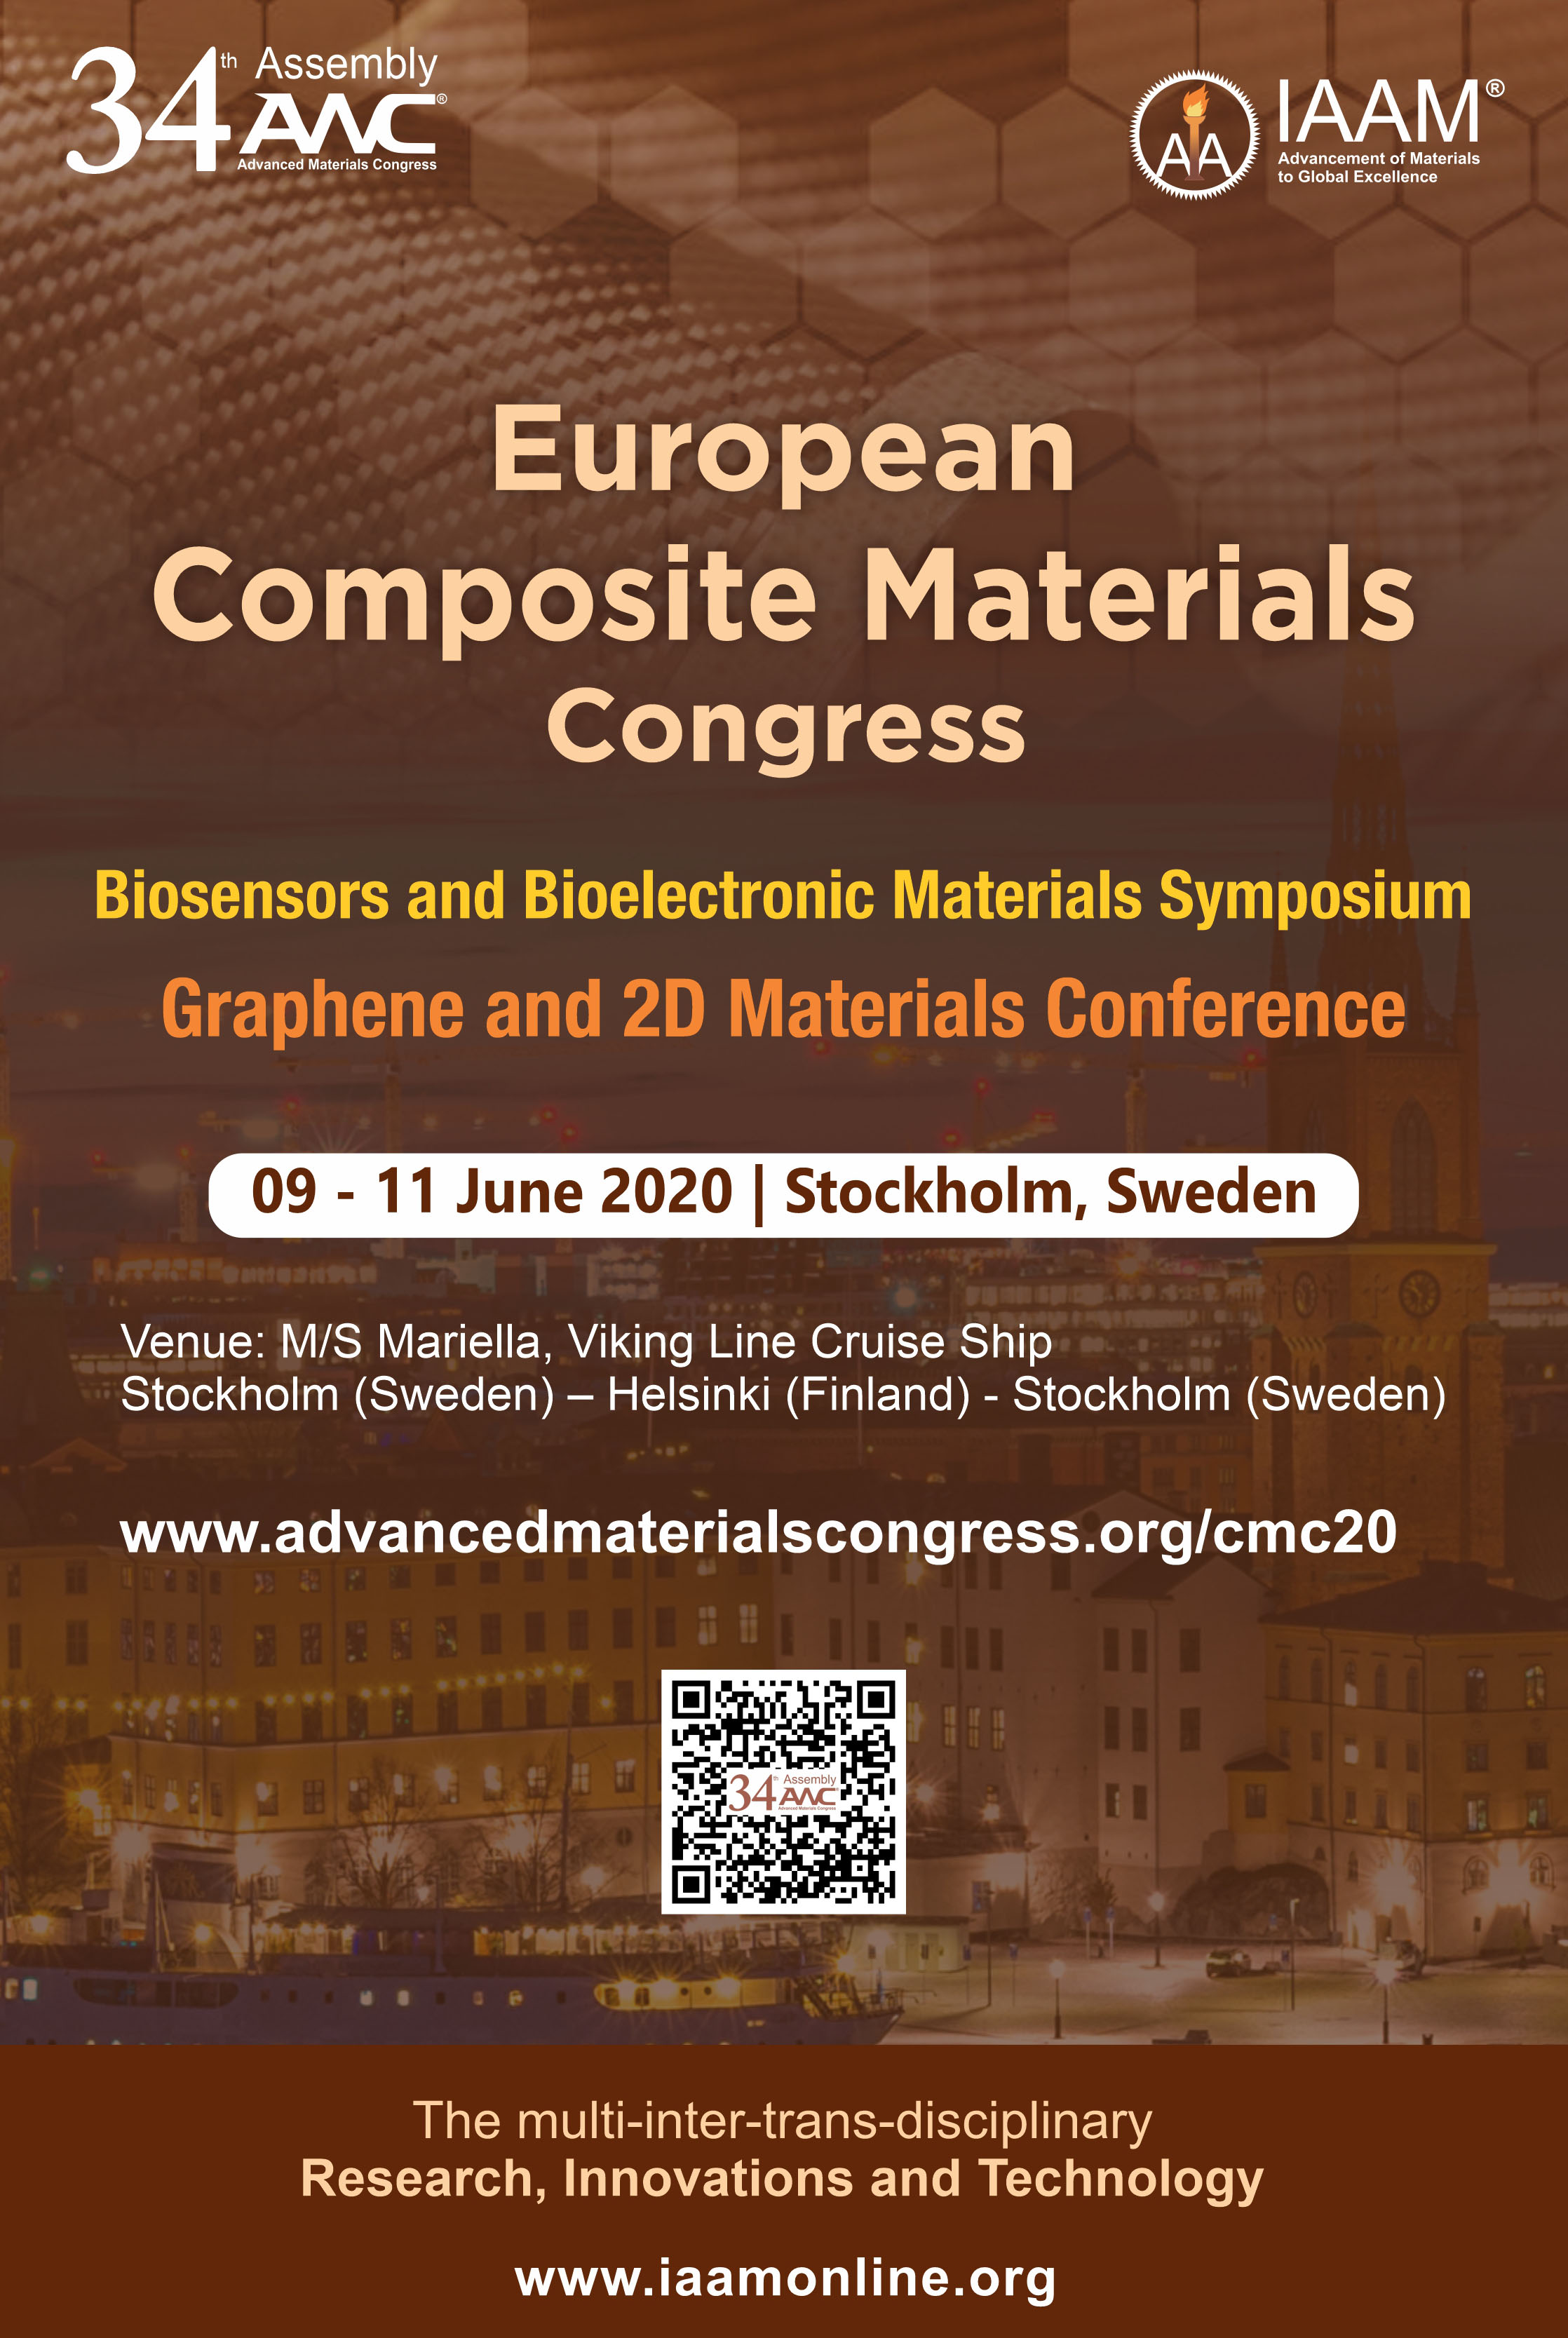 European Composite Materials Congress, Stockholm, Sweden